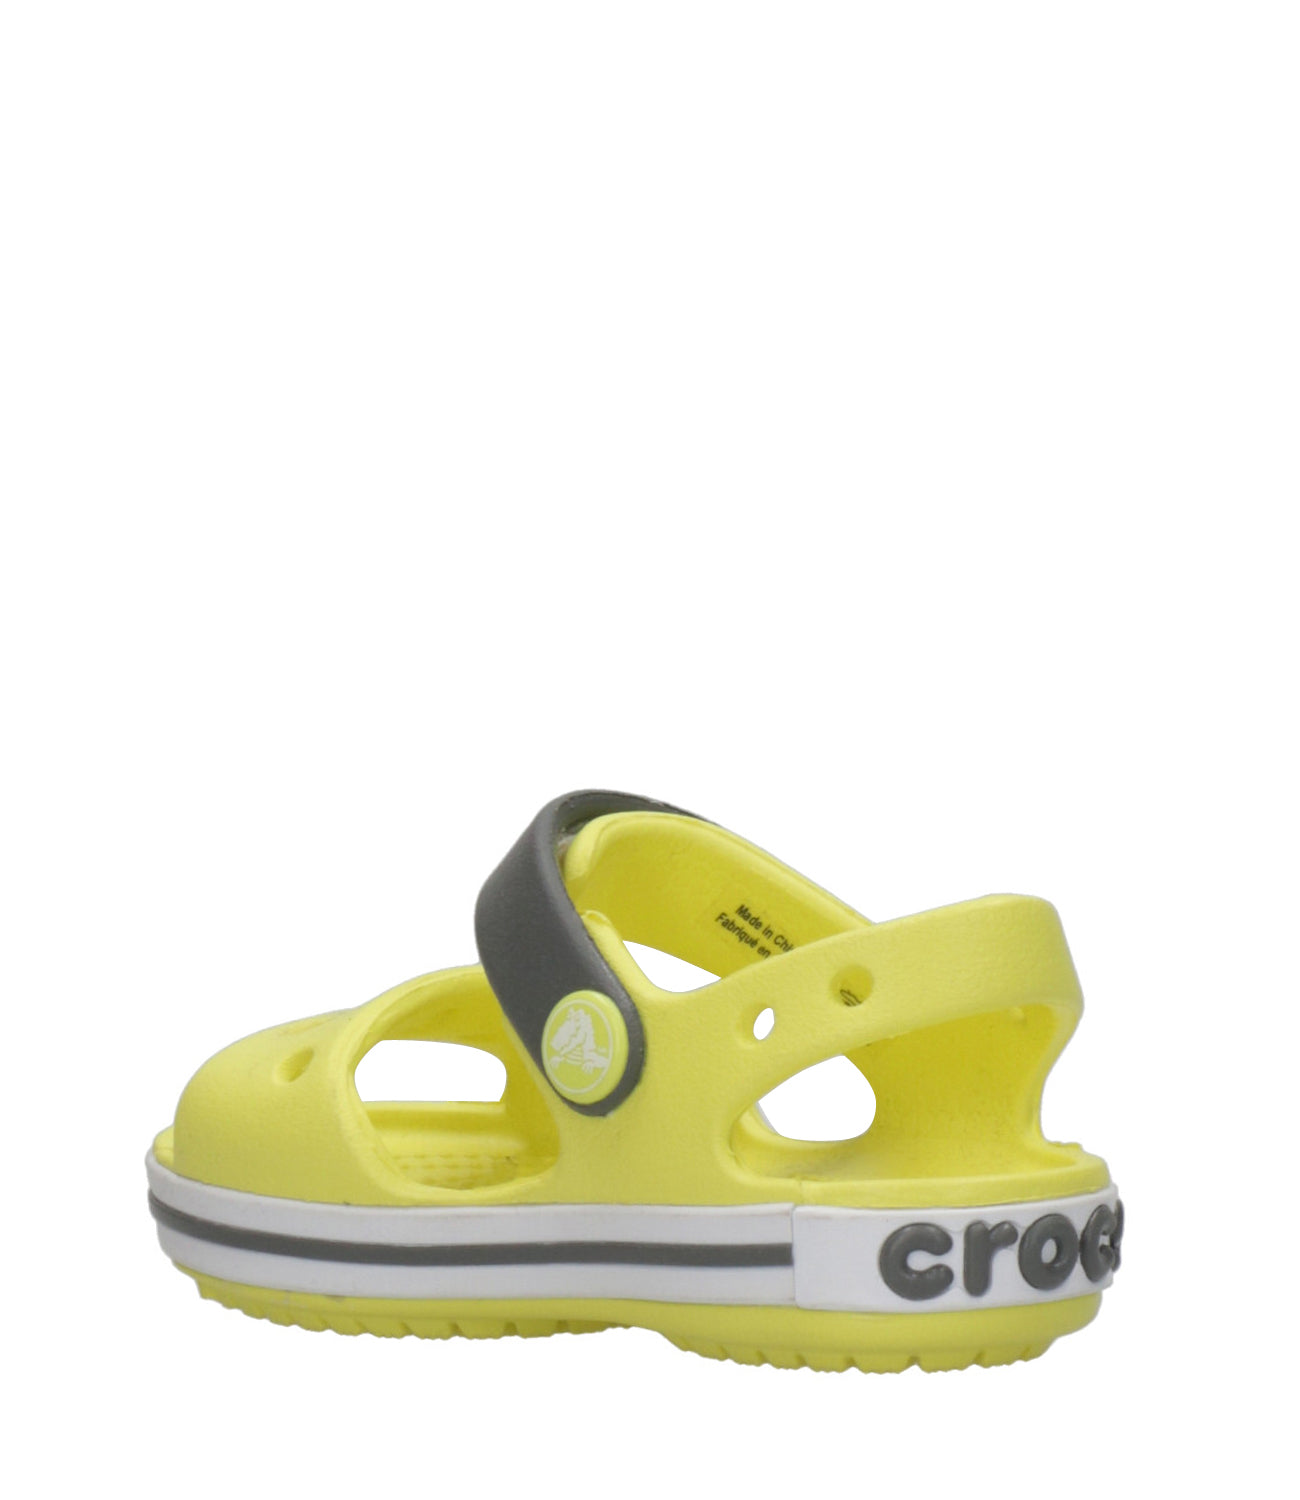 Crocs Kids | Sabot Crocband Sandalo Giallo e Grigio